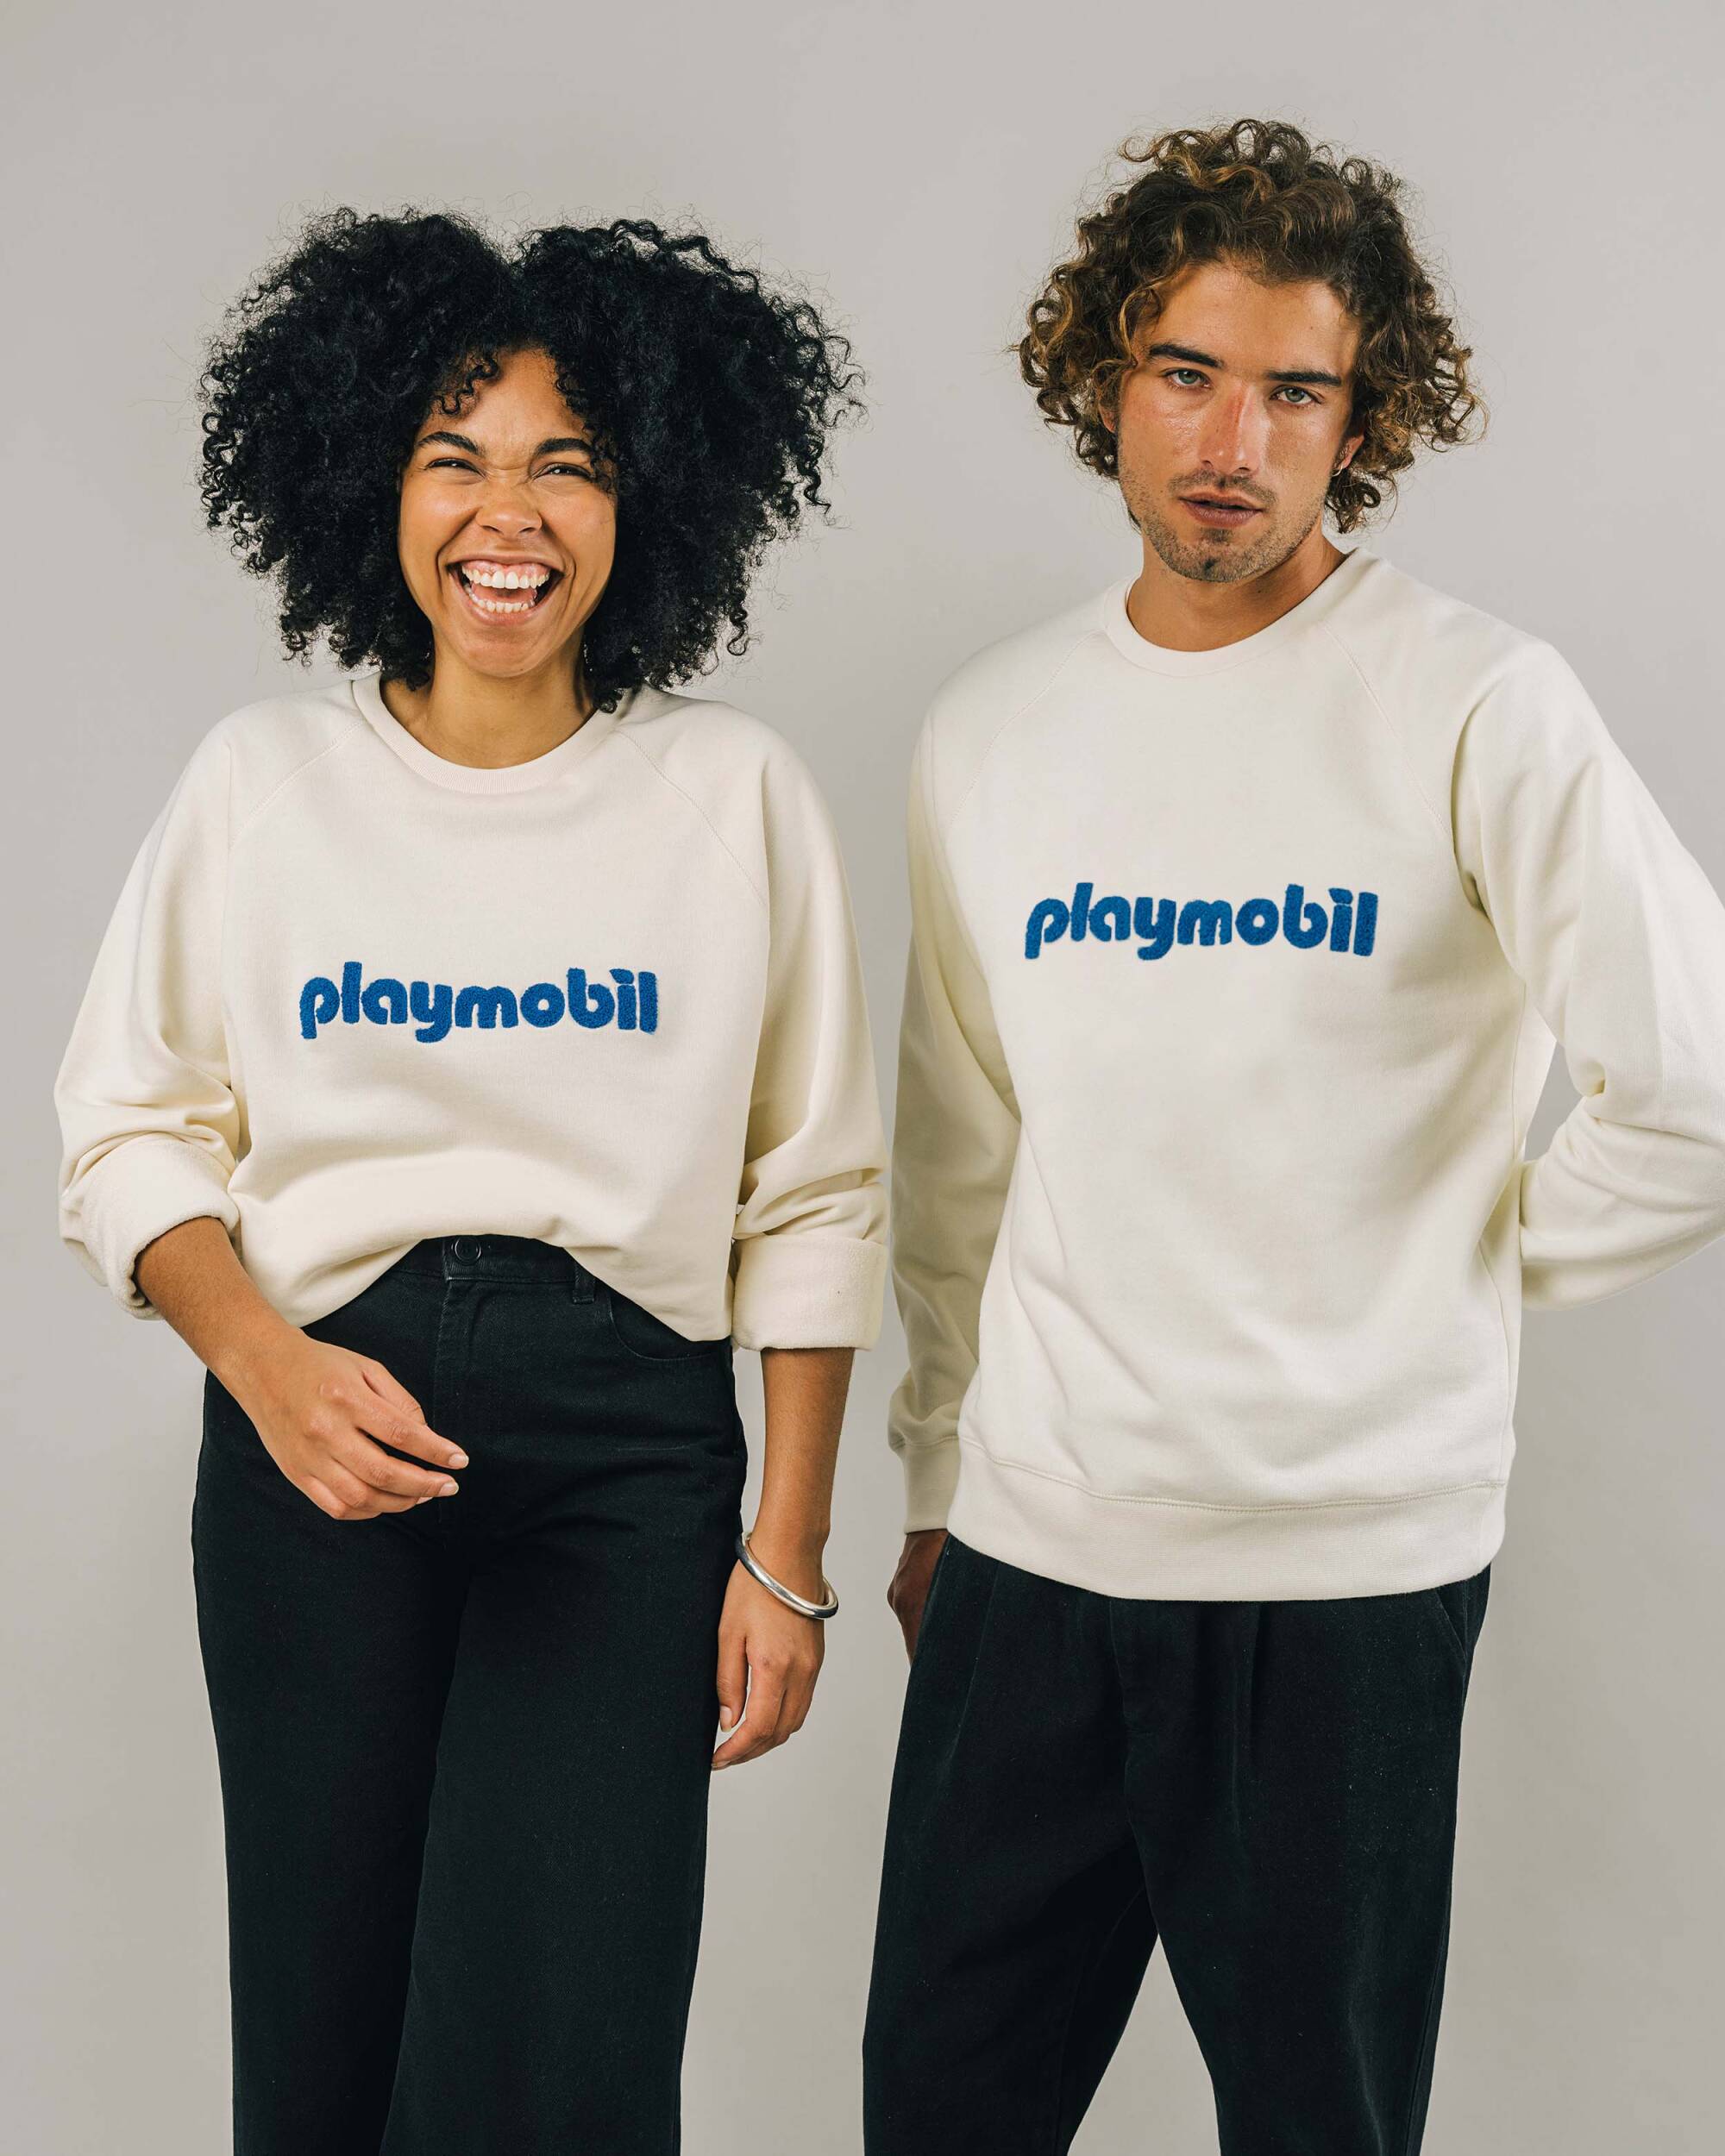 Playmobil Logo Sweatshirt Ecru